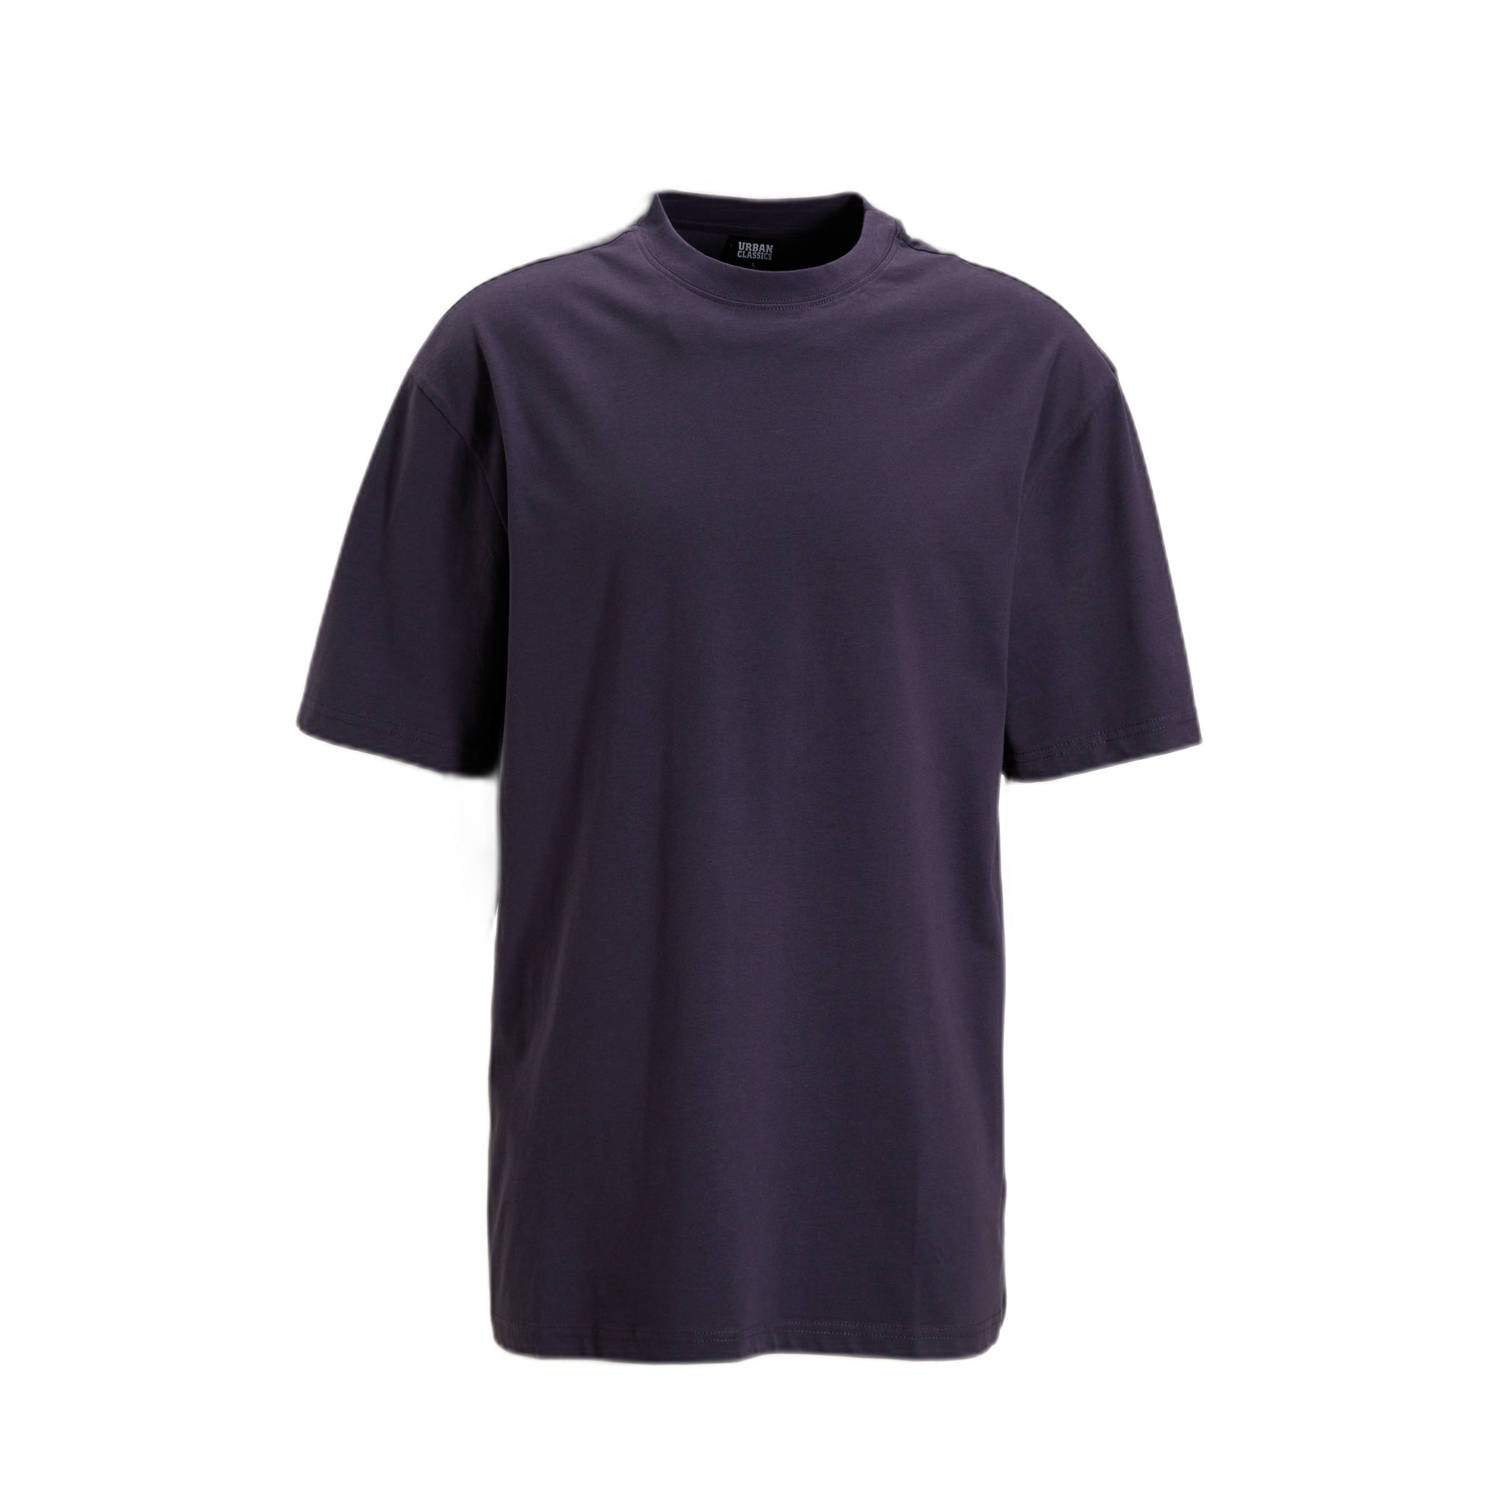 Urban Classics oversized T-shirt purplenight